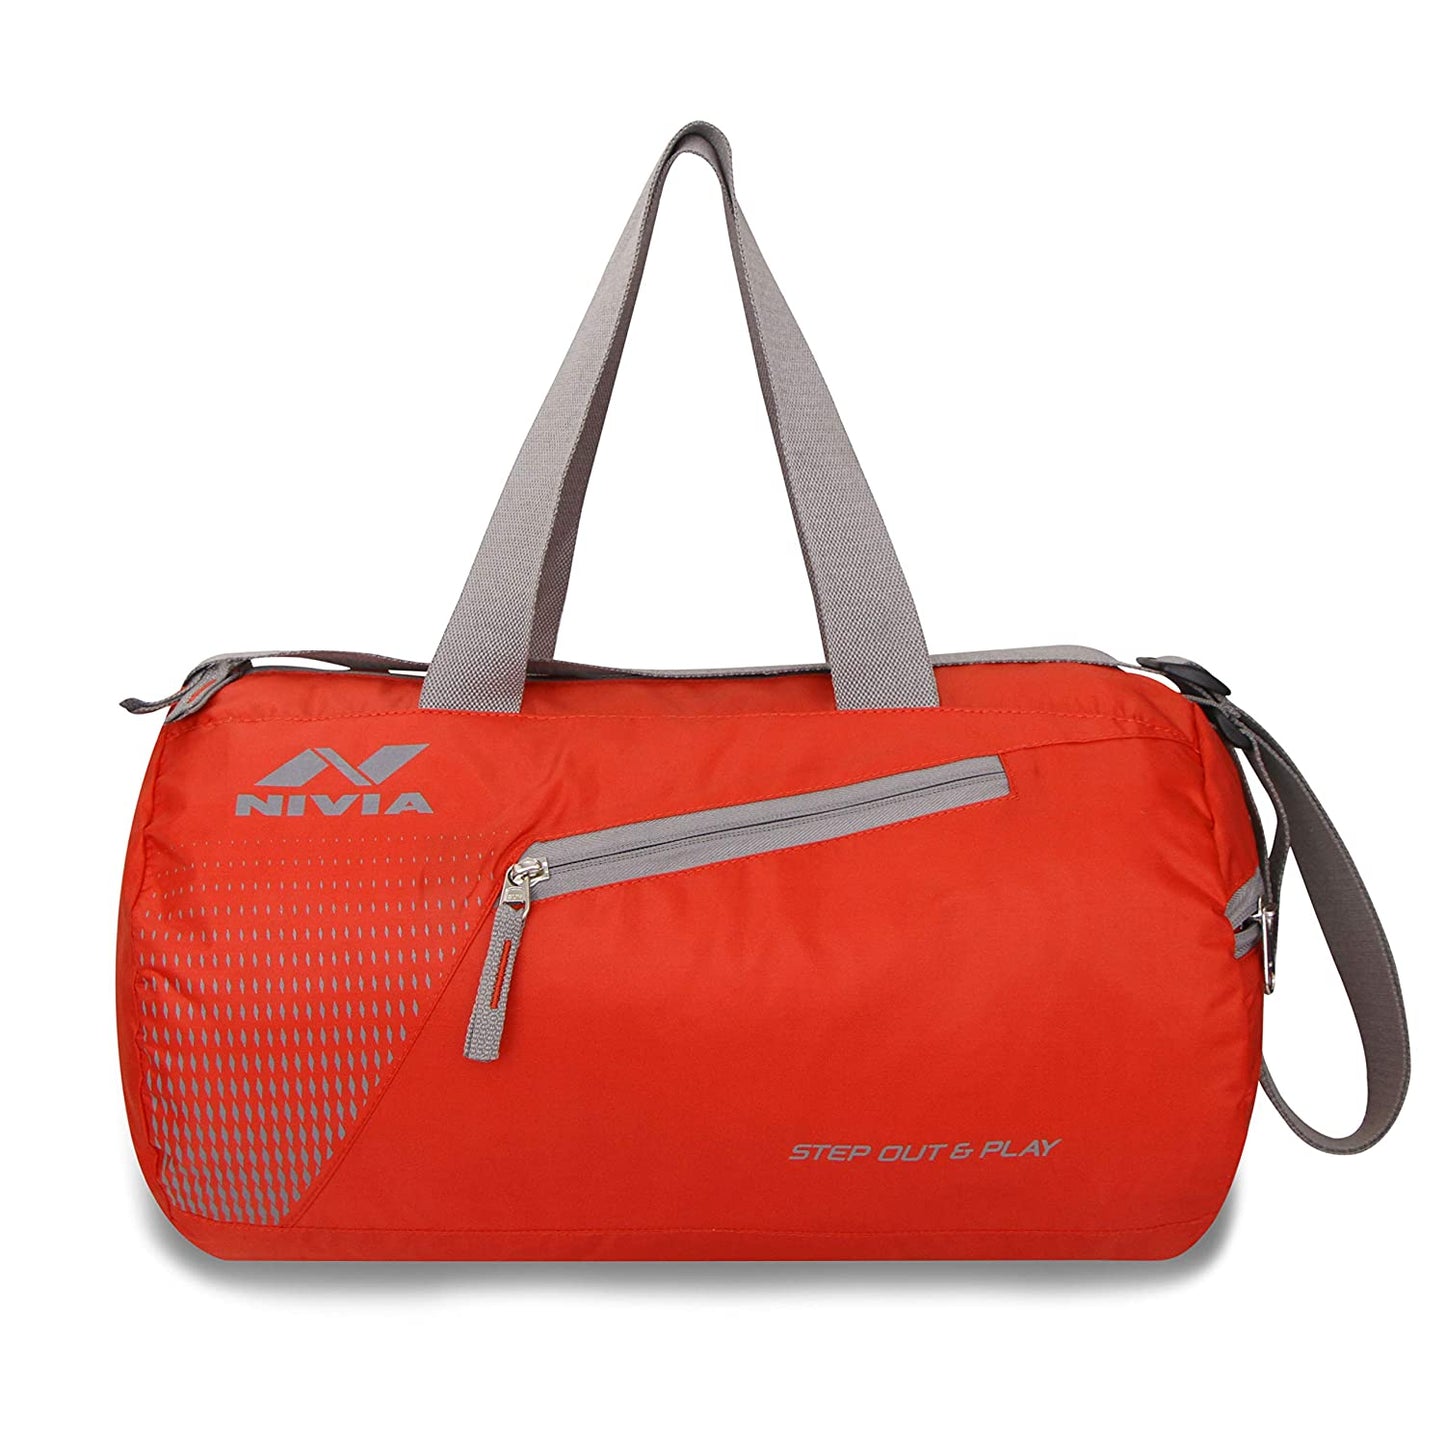 Nivia Deflate Polyester Round Gym Bag, Red/Grey - Best Price online Prokicksports.com